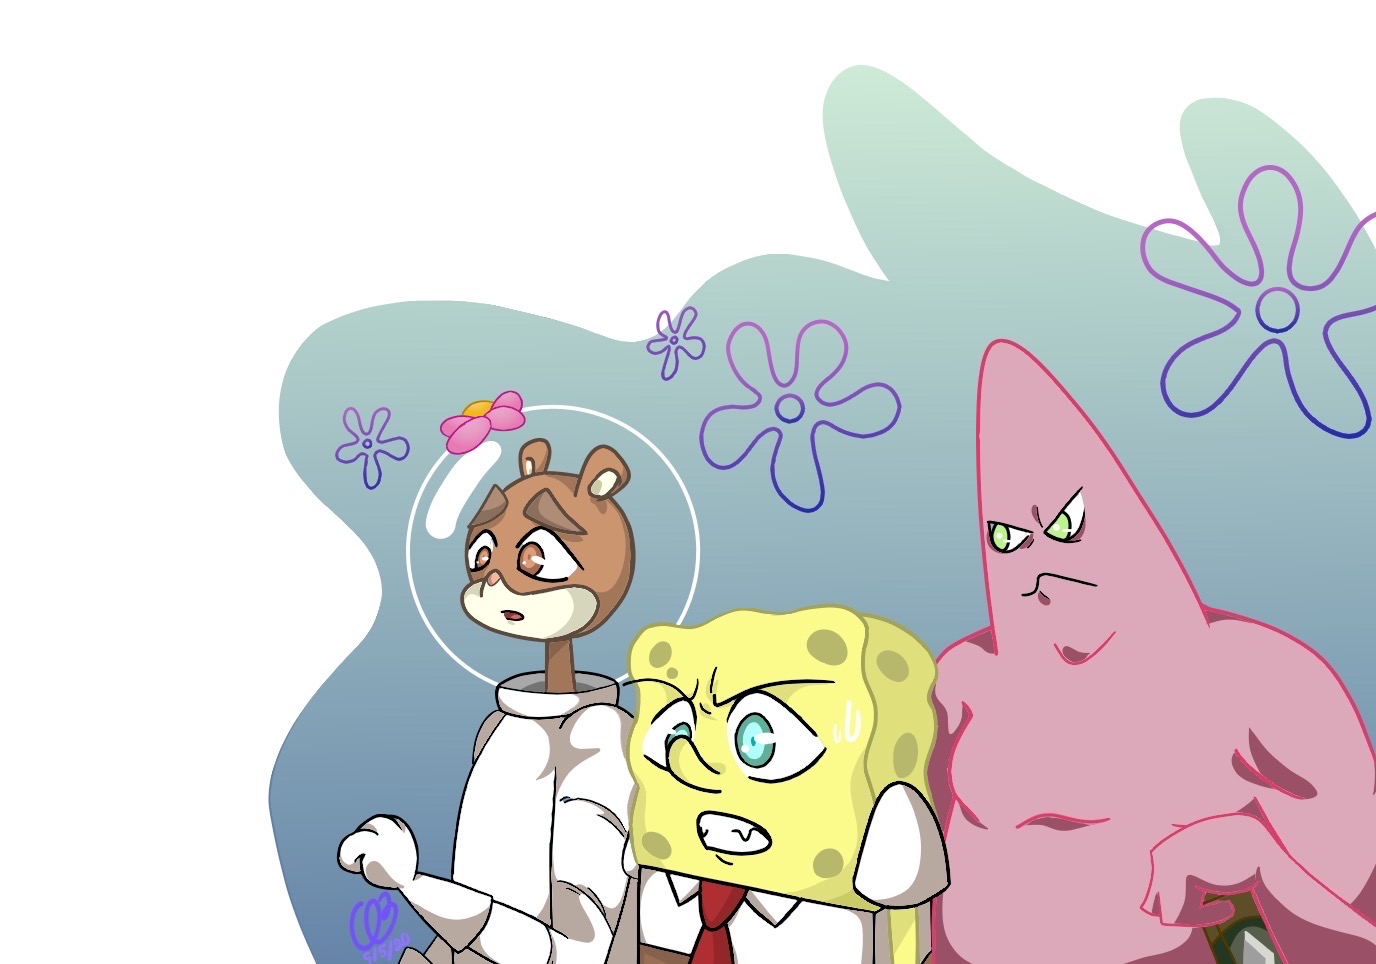 Fanart of the Spongebob Anime by CuriousBubblyBeetle on DeviantArt